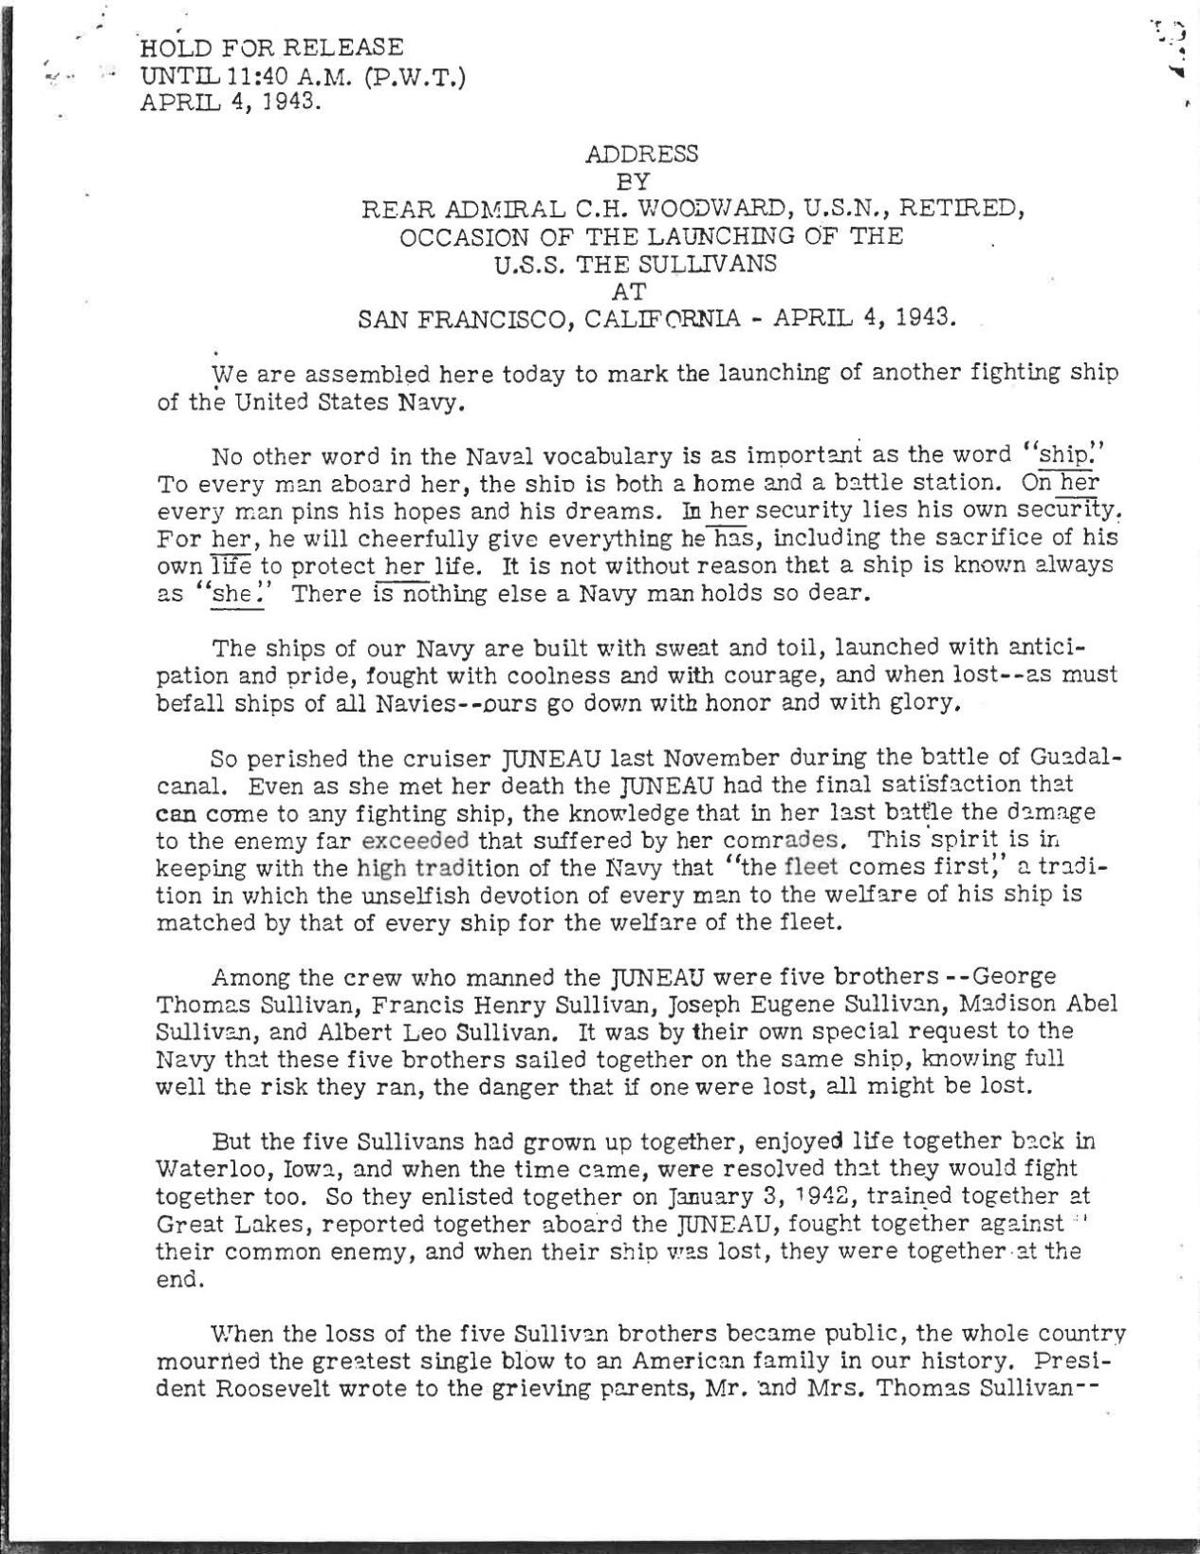 Navy doc -- USS The Sullivans launch speech April 4, 1943